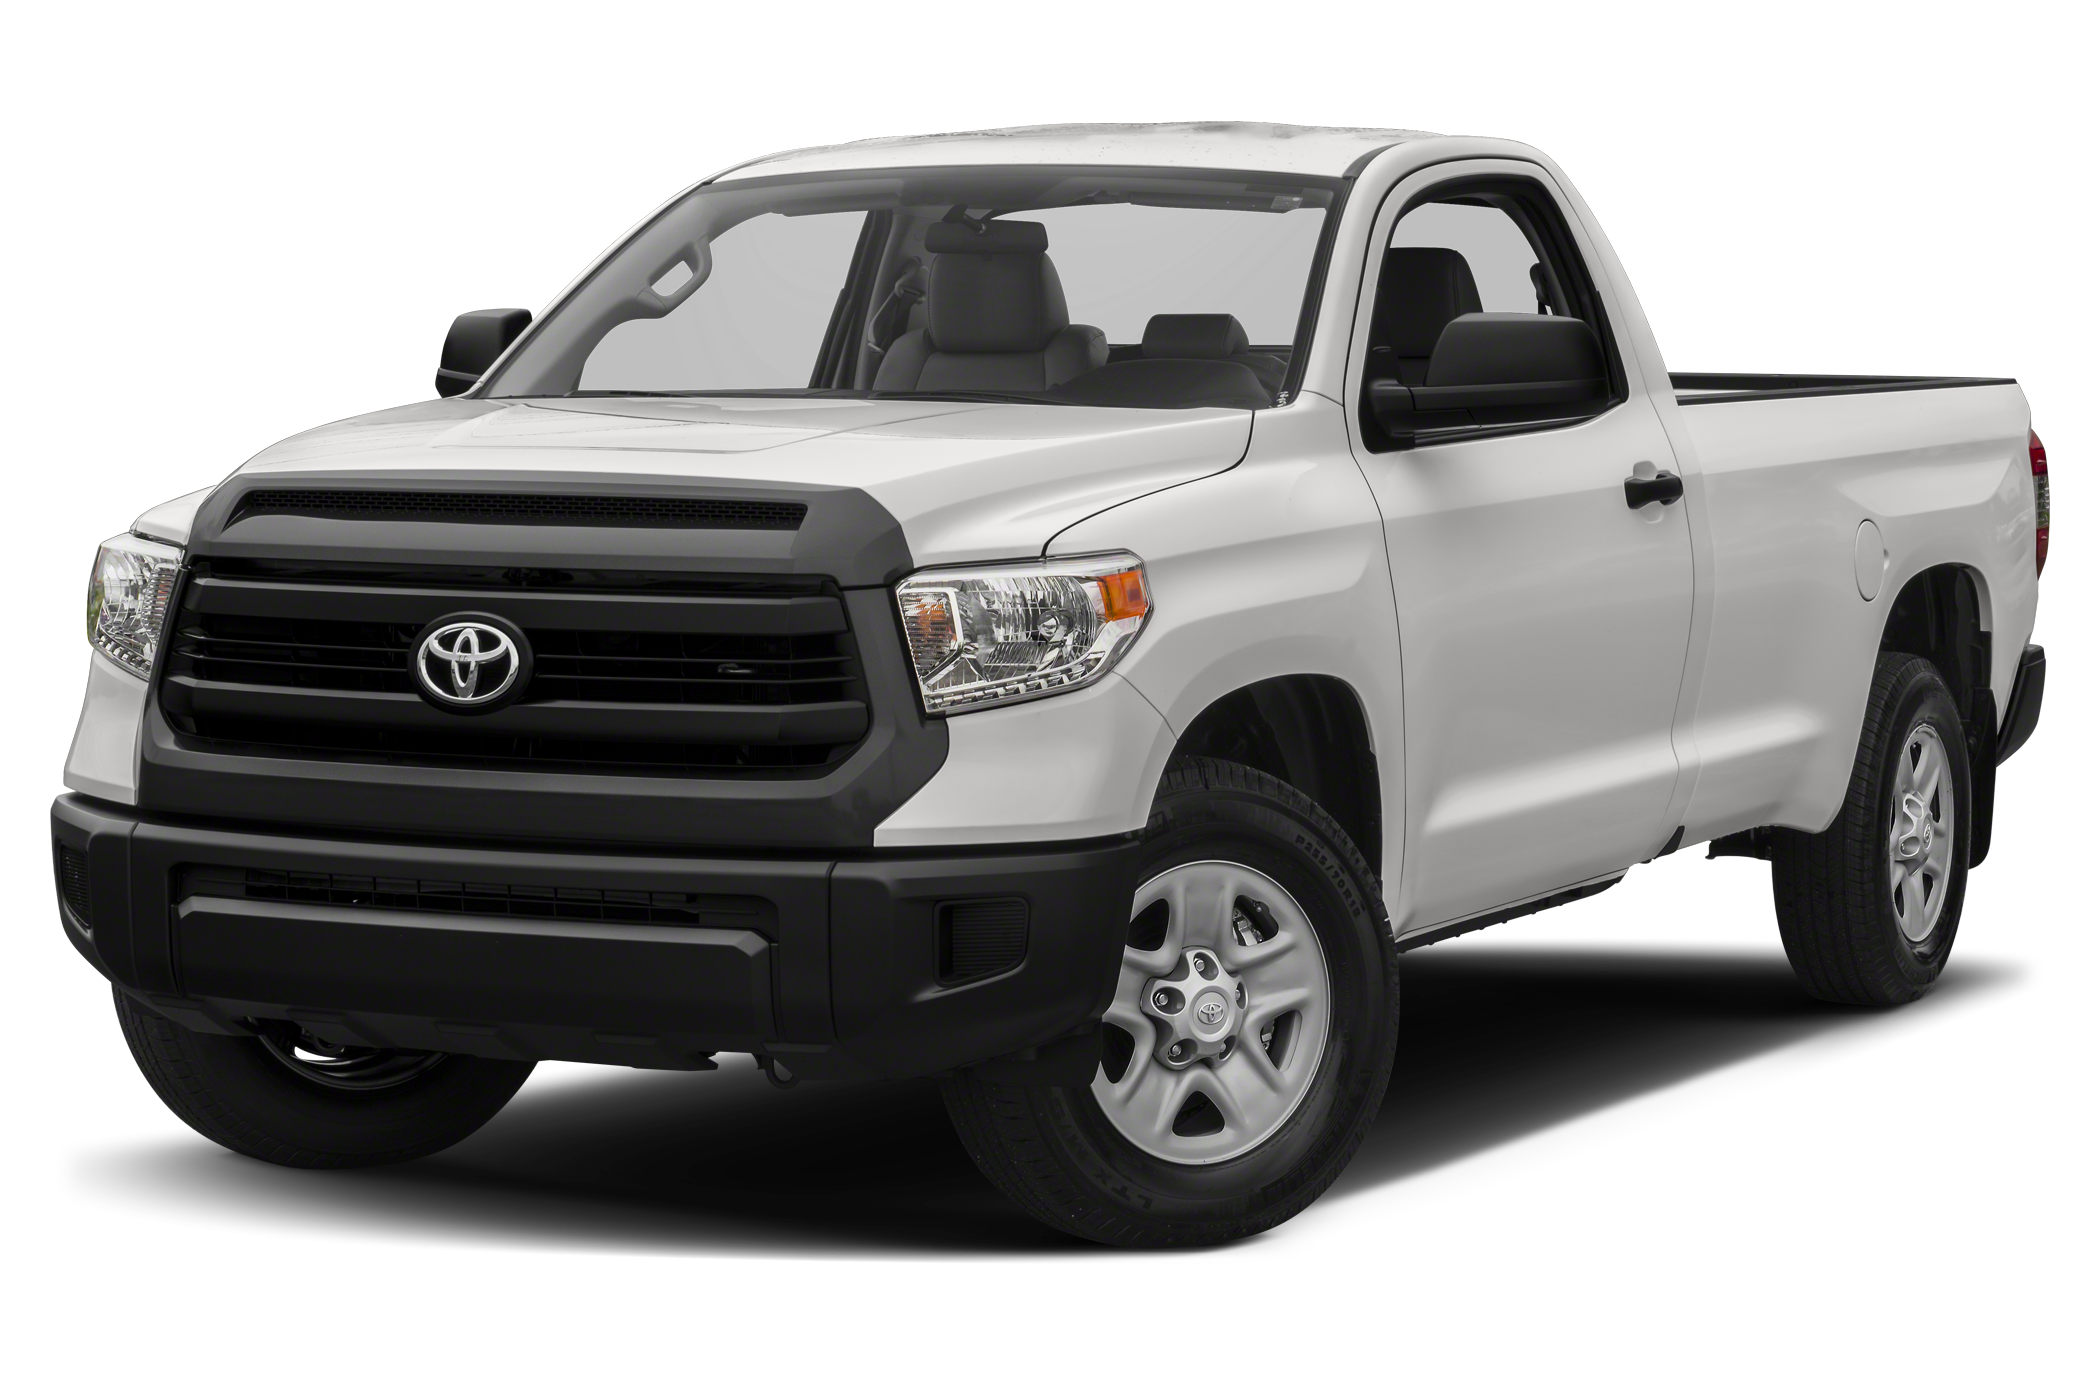 2016 Toyota Tundra - View Specs, Prices & Photos - WHEELS.ca